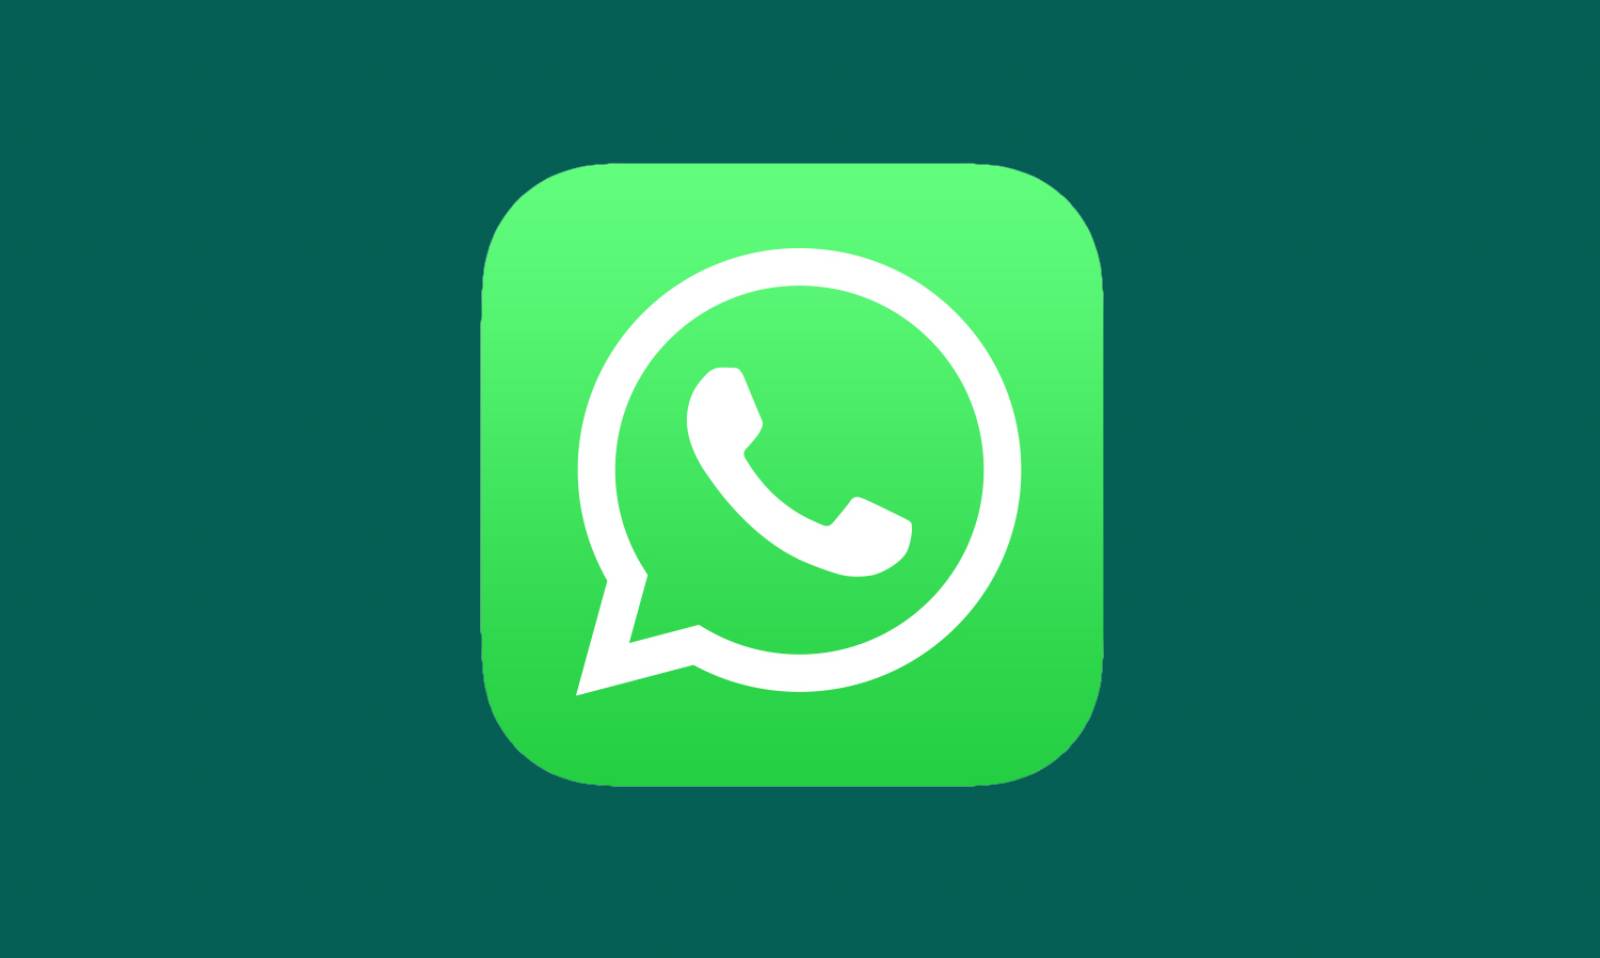 WhatsApp battery consumption